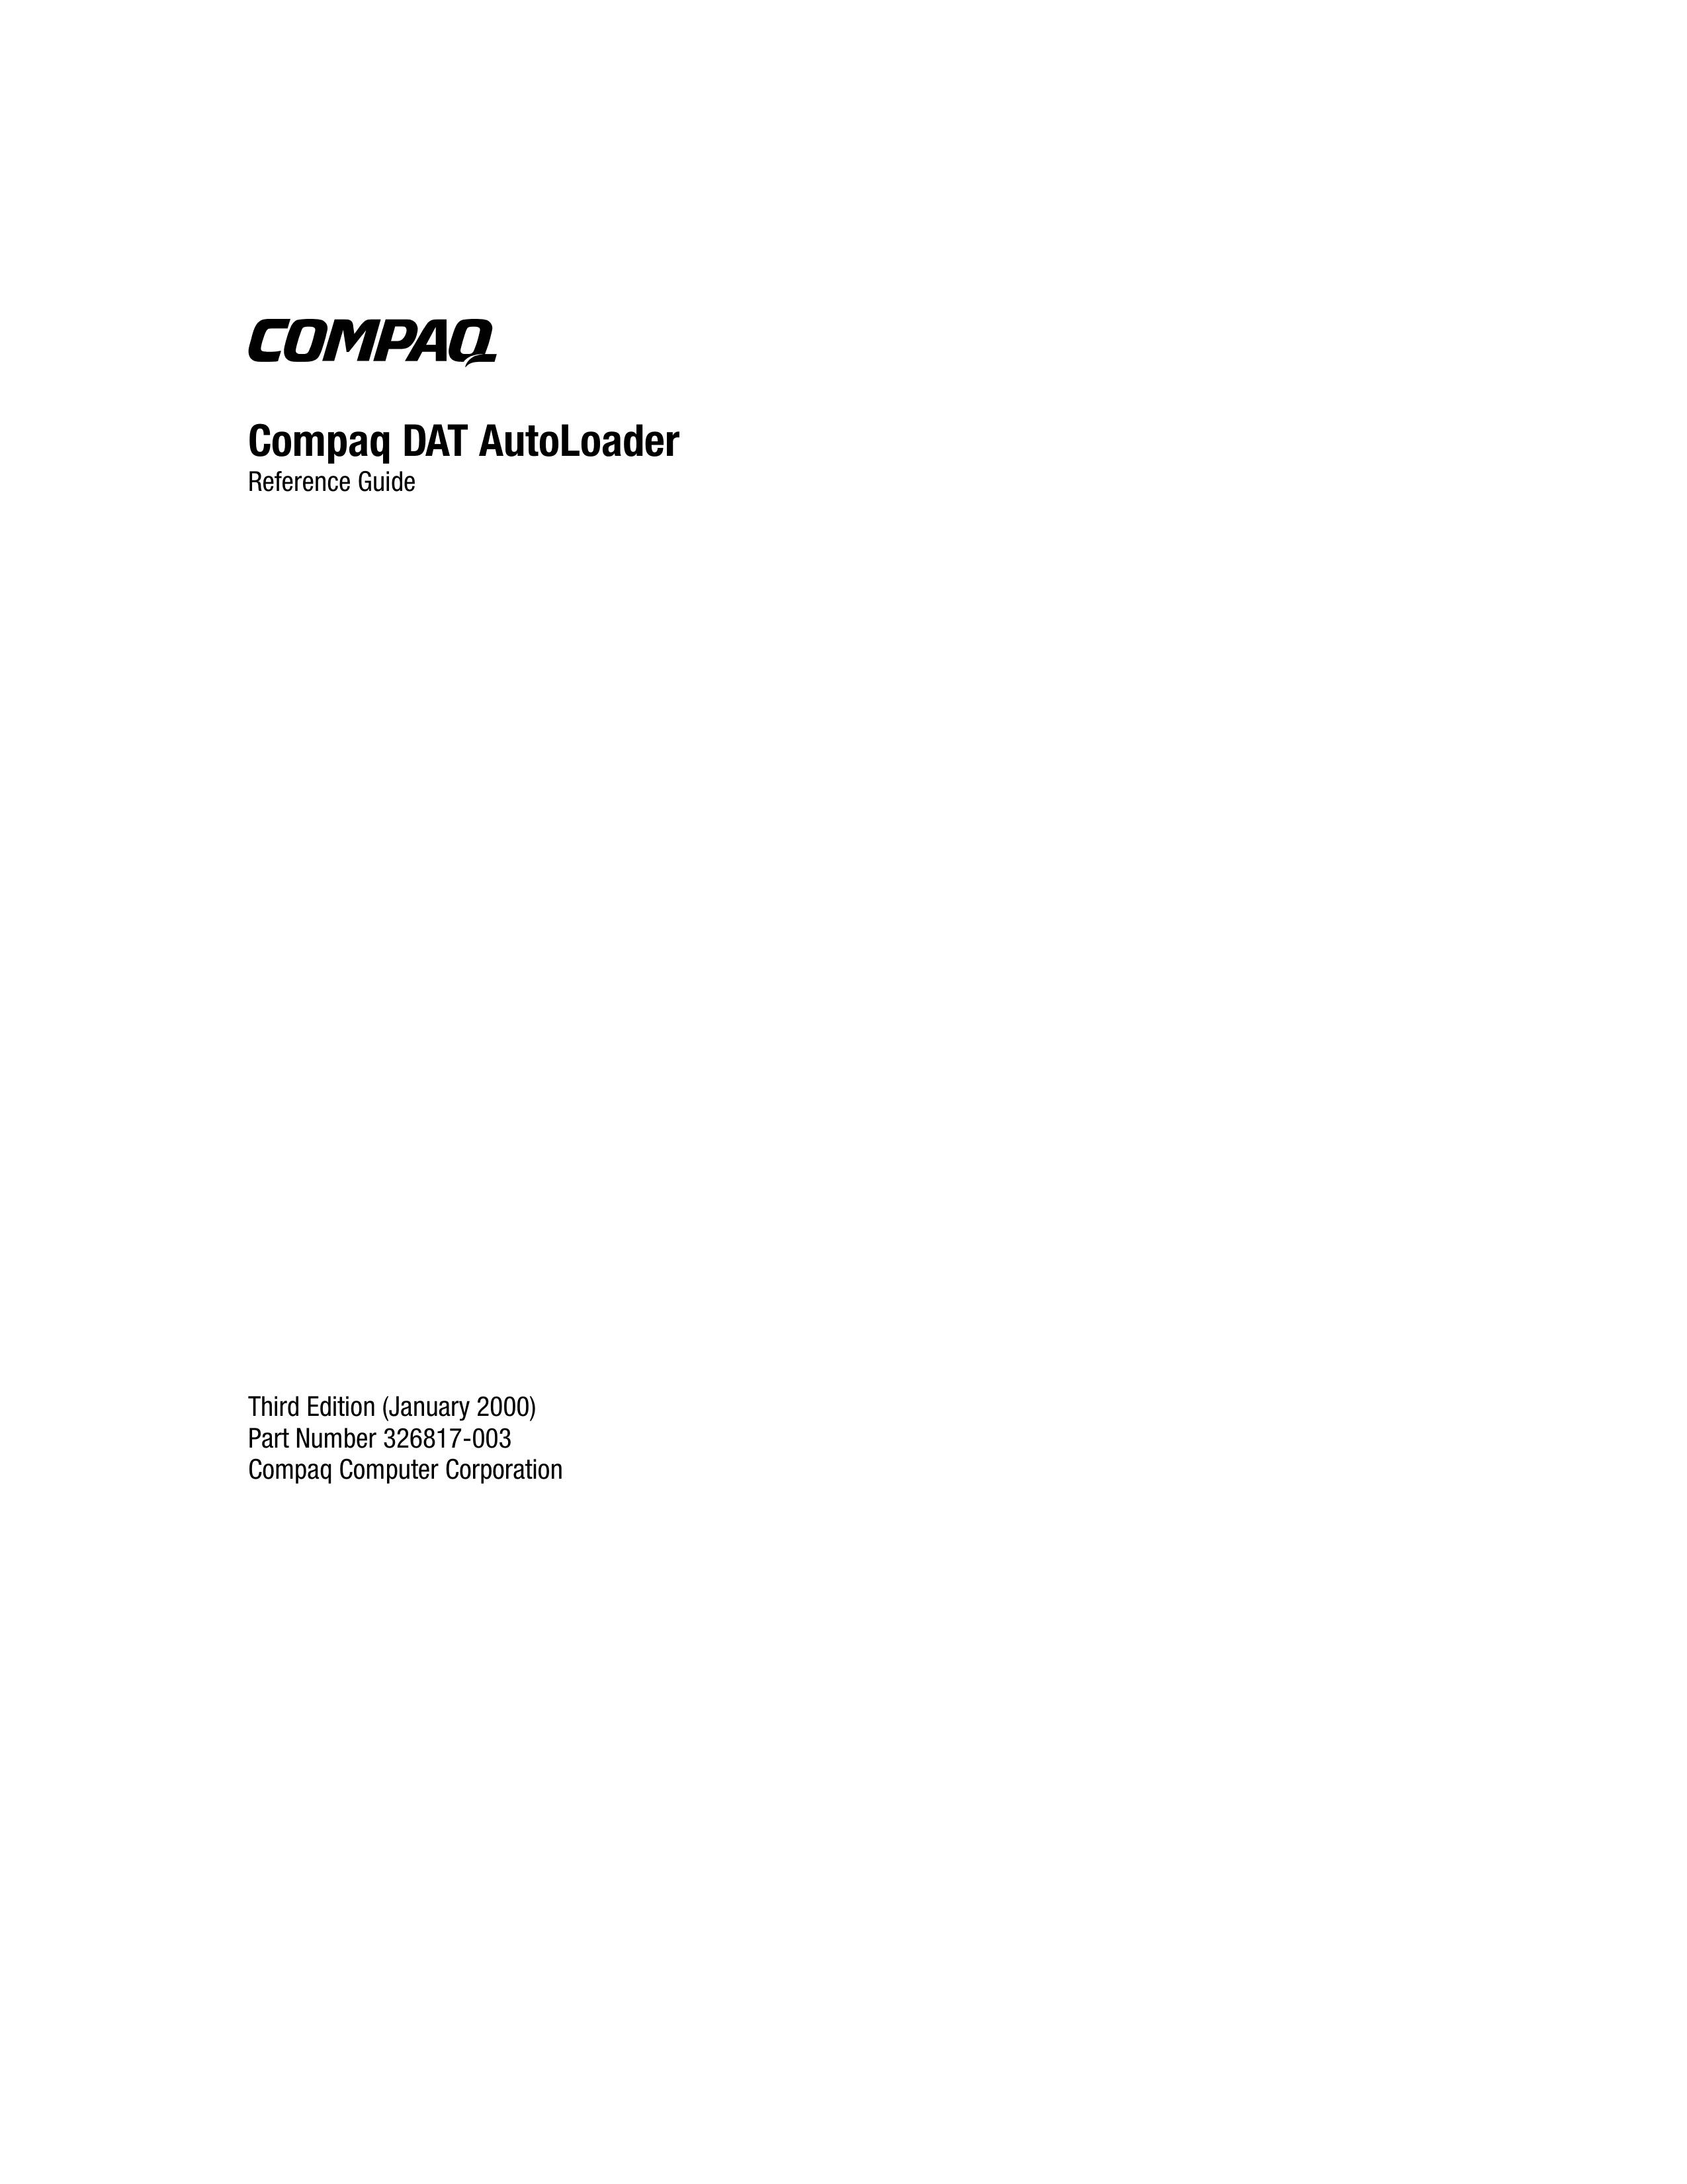 Compaq 326817-003 Compact Loader User Manual